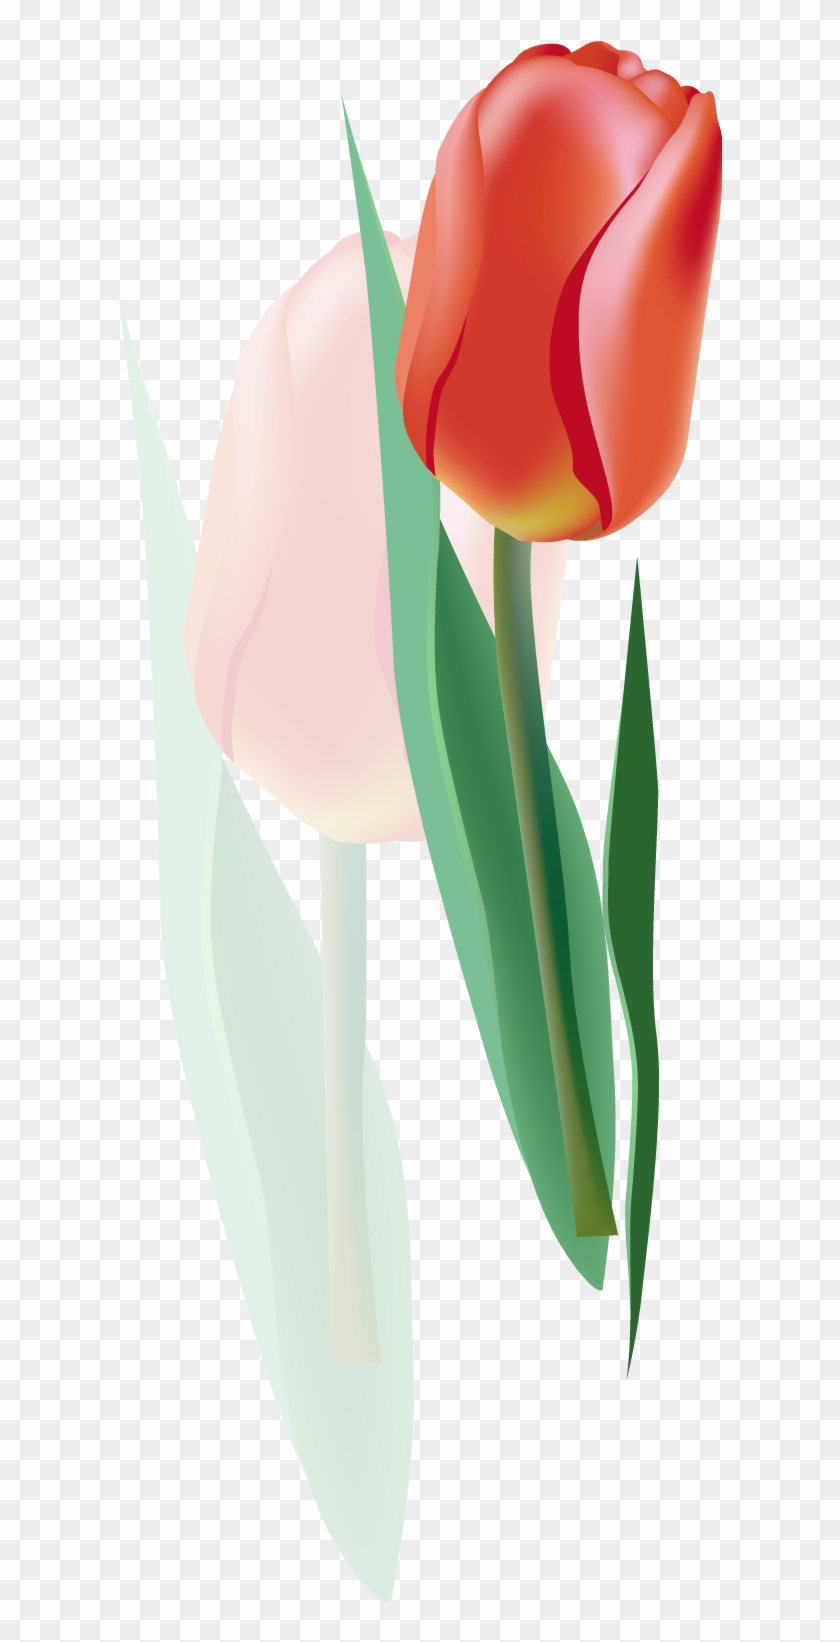 Tulip Euclidean Vector Flower - Tulip Euclidean Vector Flower #278127